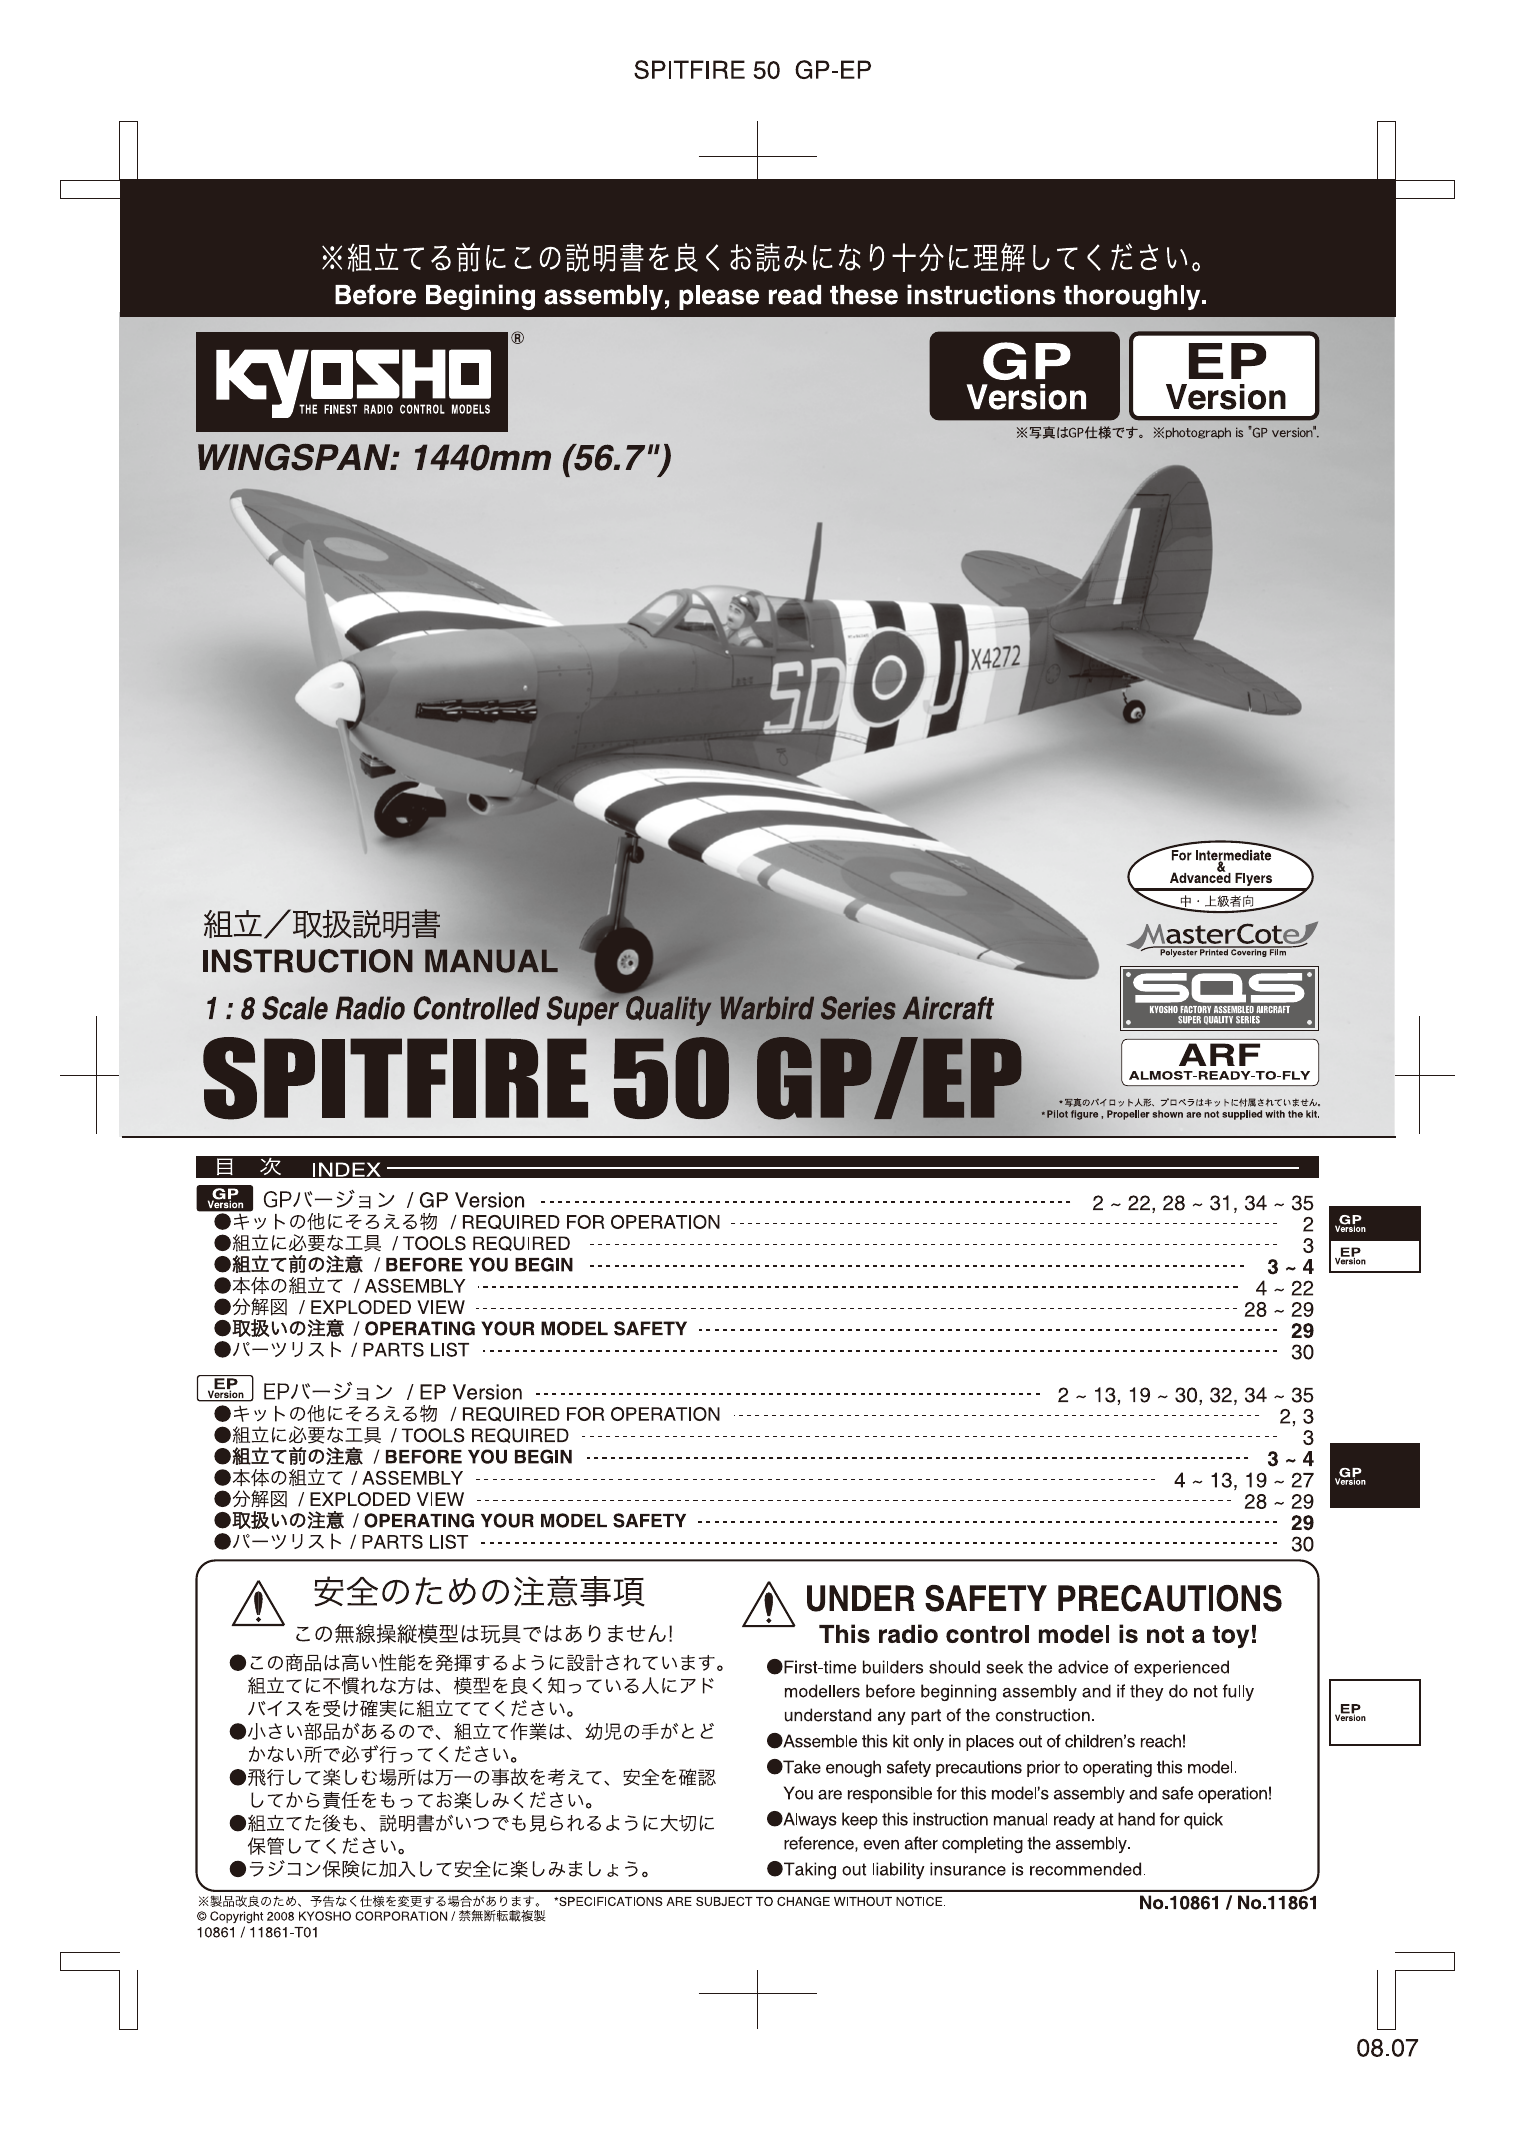 Kyosho Spitfire 50 Ep Gp No No User Manual Manualzz